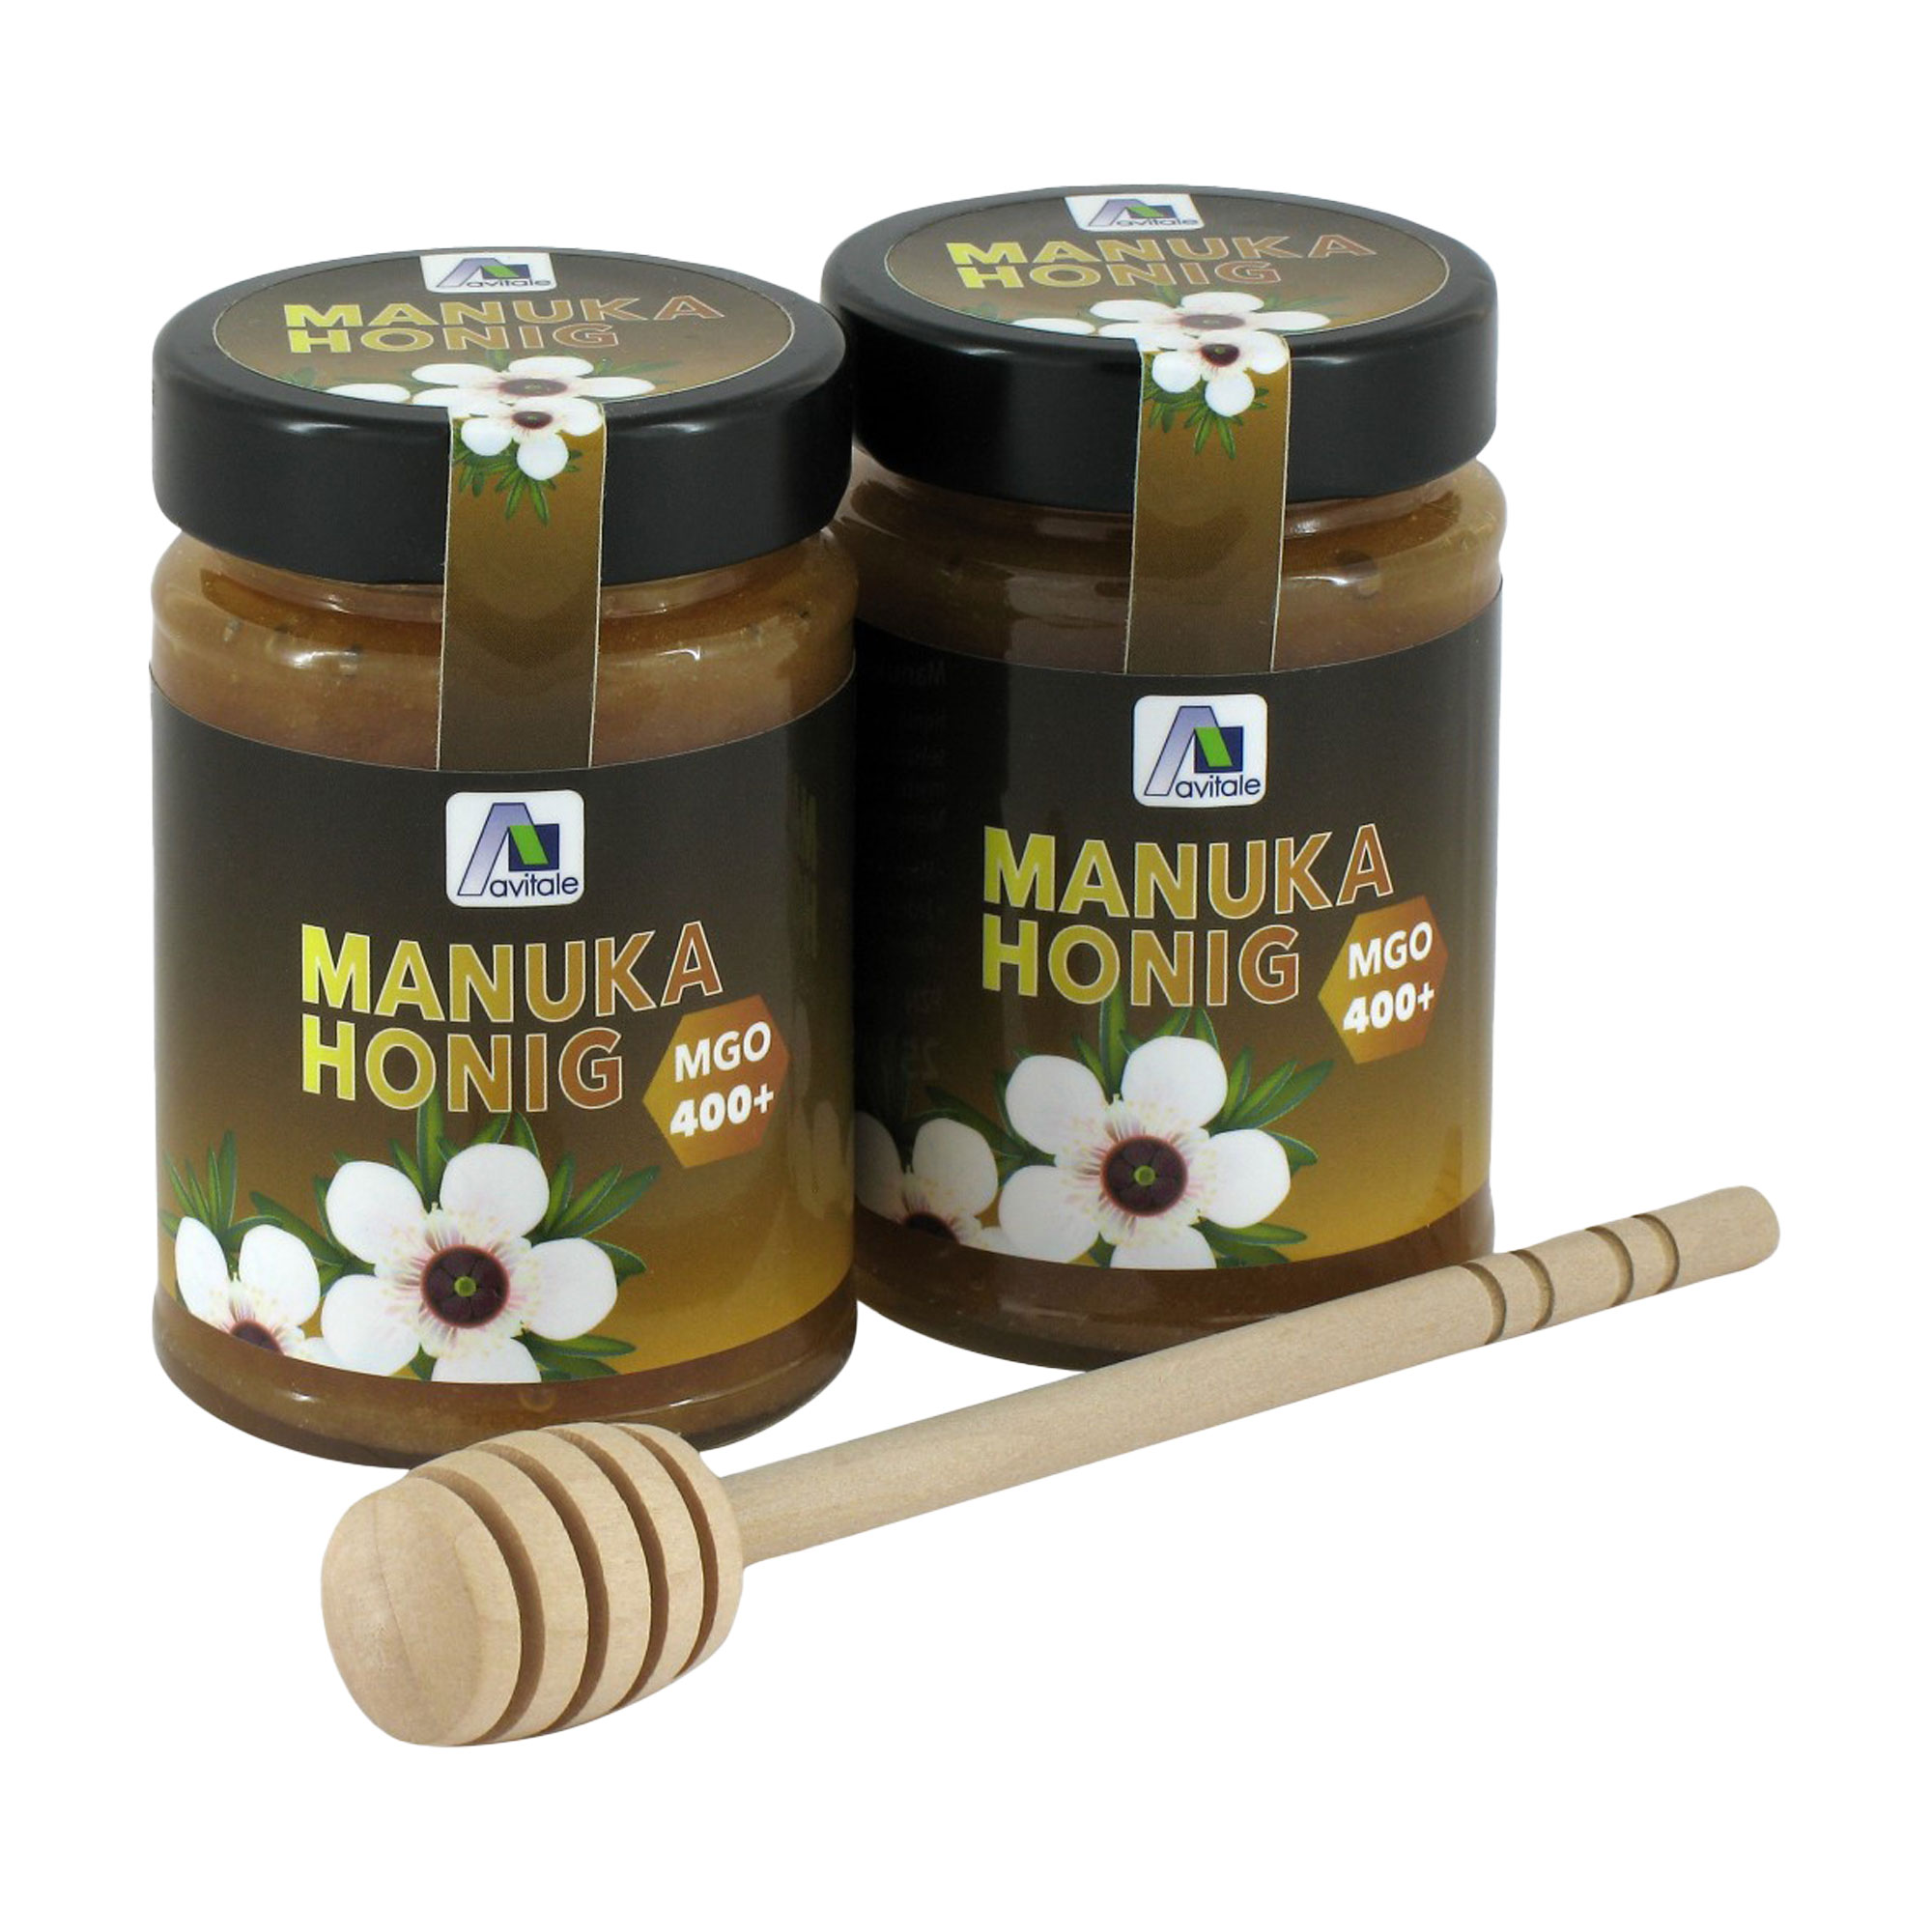 Honig aus Neuseeland mit mindestens 400 mg Methylglyoxal (MGO) pro Kilogramm Honig. Inkl. Honiglöffel.